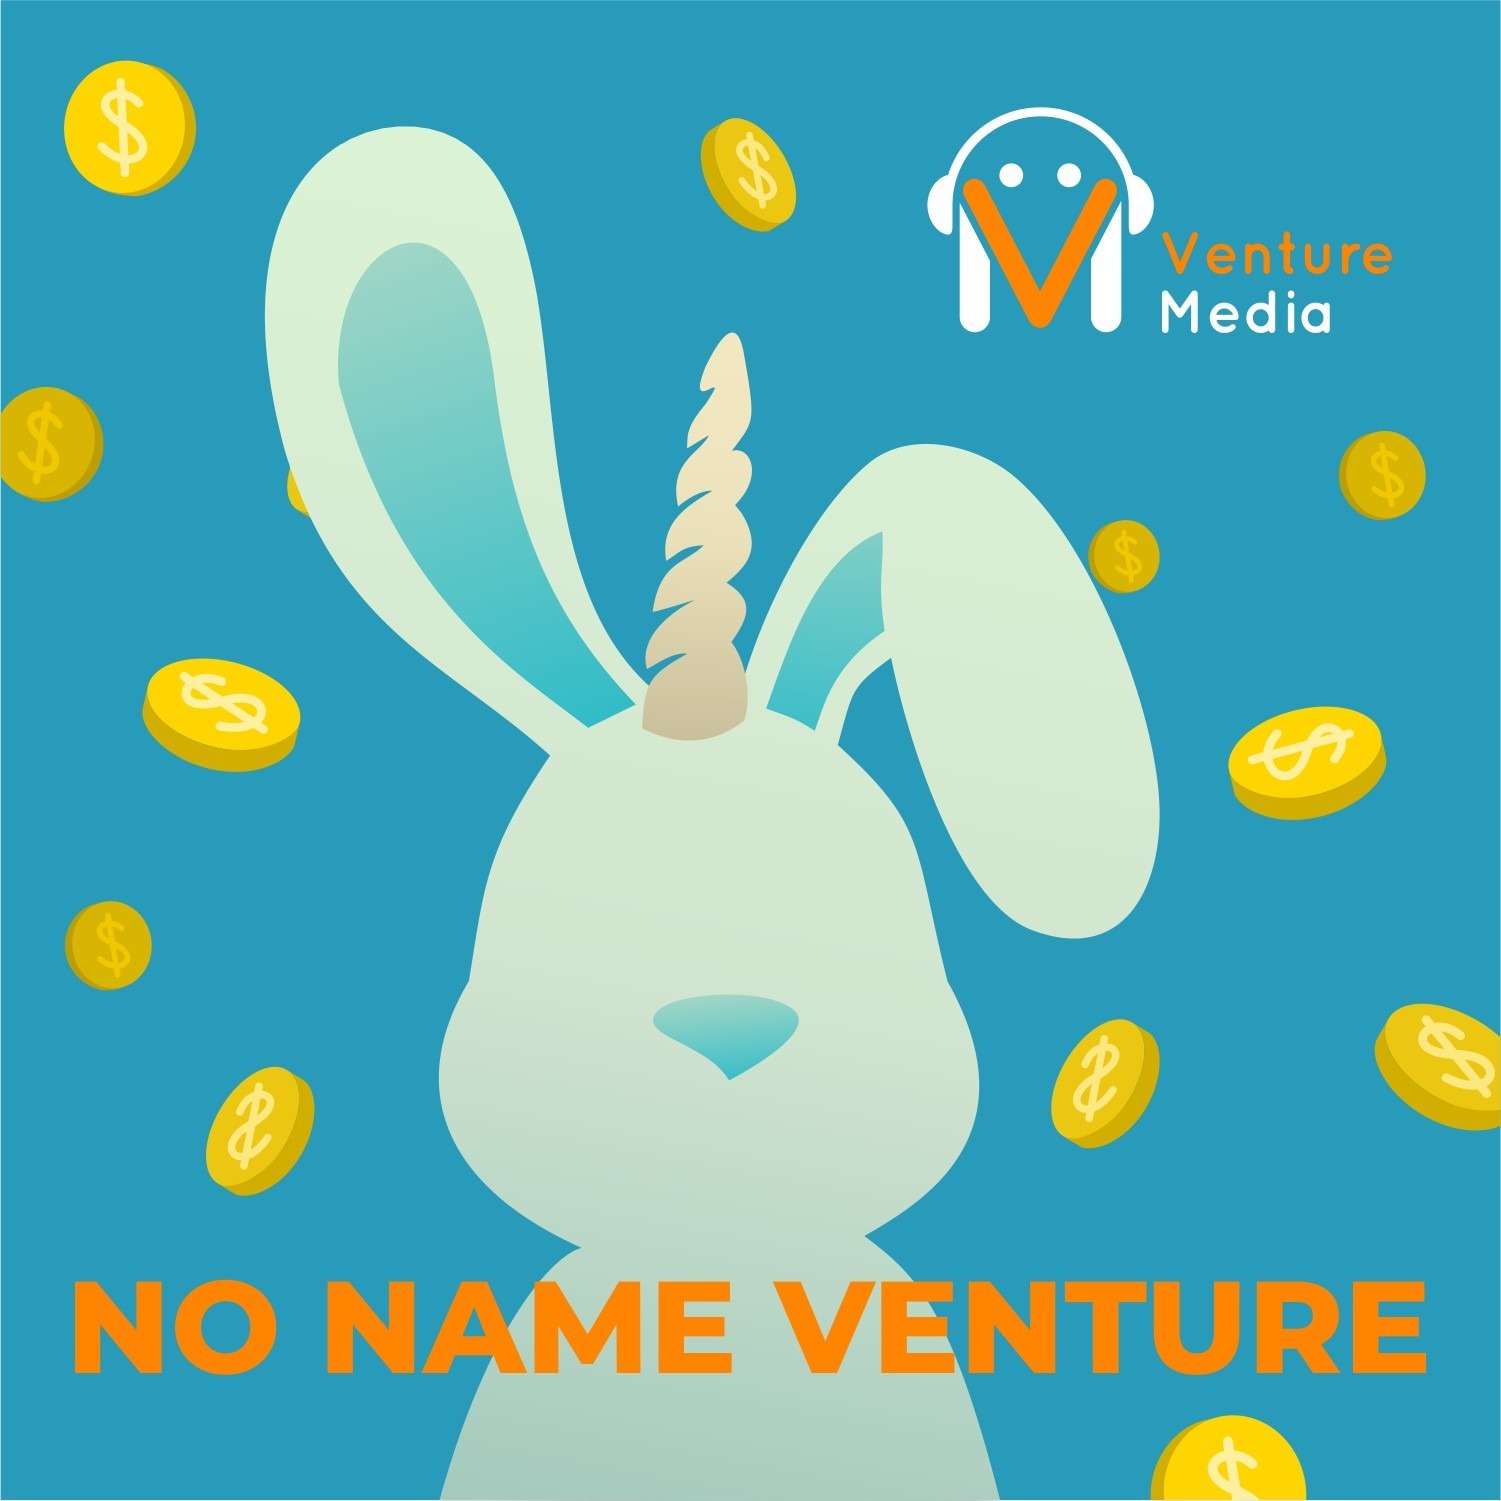 No name venture:Venture Media